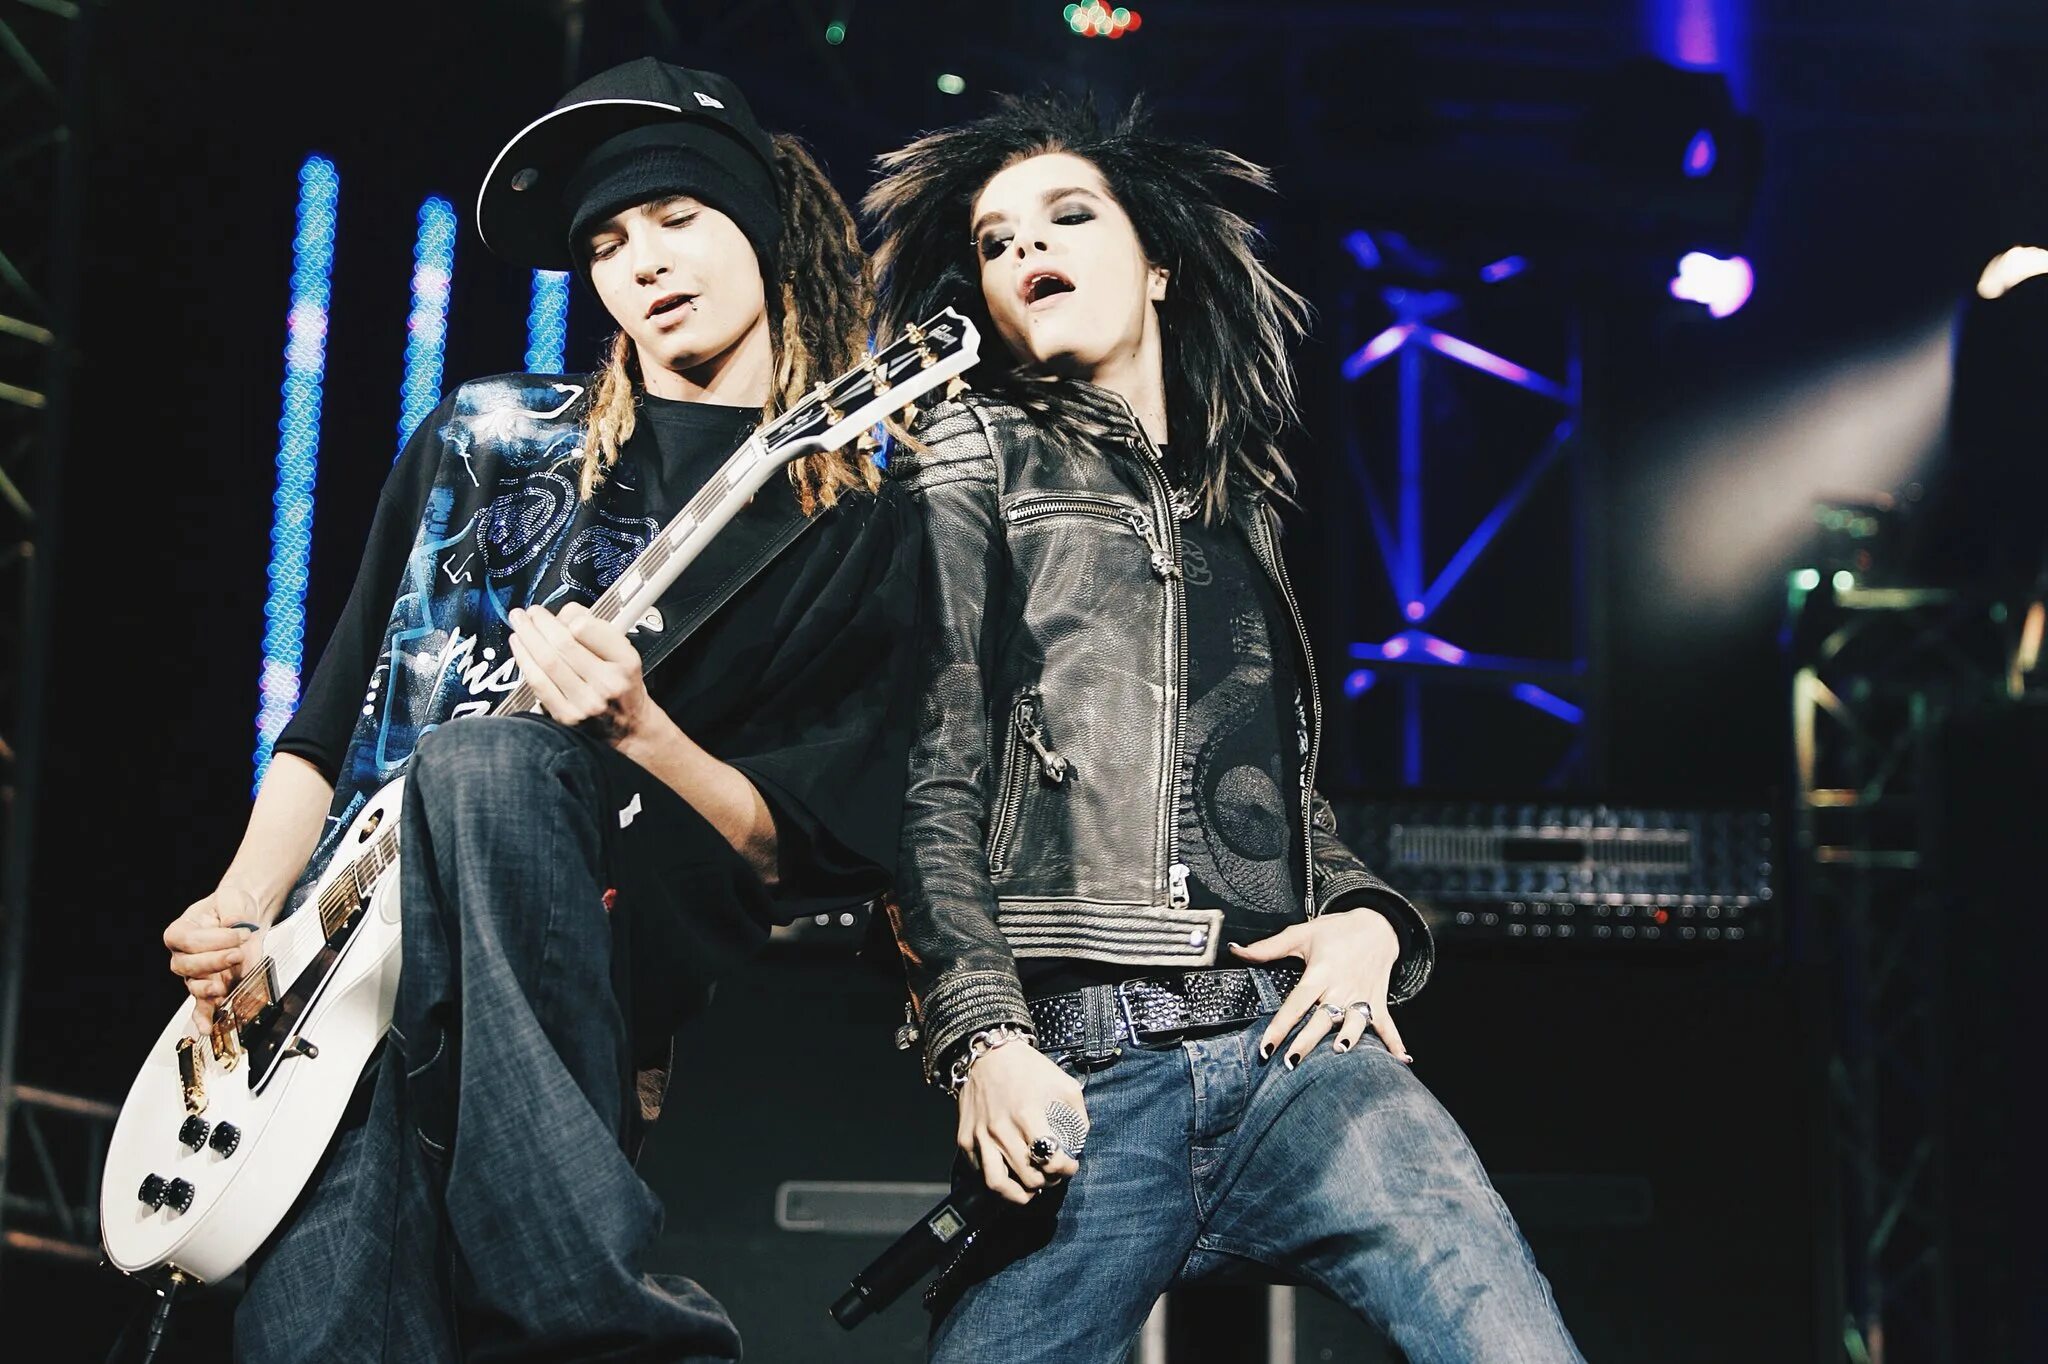 Tom and bill. Билл Каулитц 2007. Tokio Hotel Bill 2007. Билл и том Каулитц 2007. Братья Каулитц 2007.